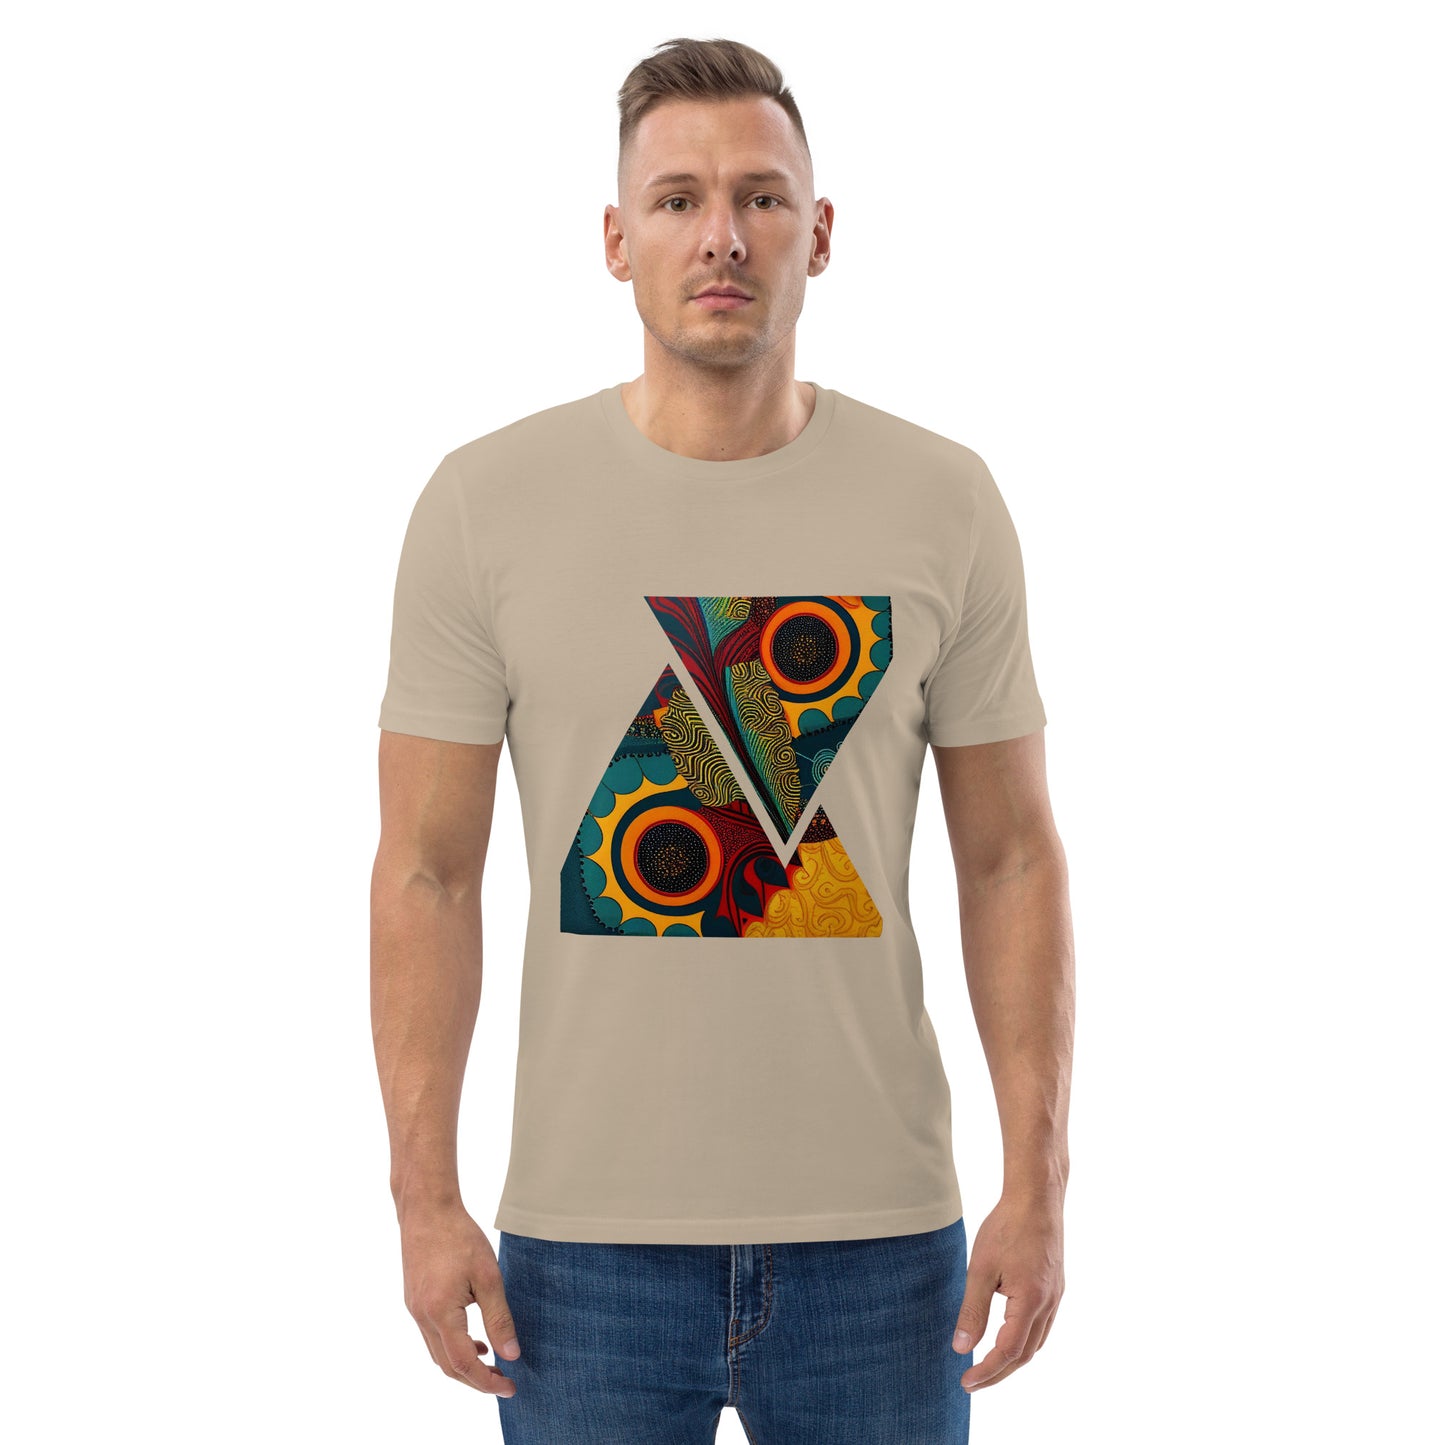 Triangle Blend: Unisex Organic Cotton T-Shirt with African Ankara Design